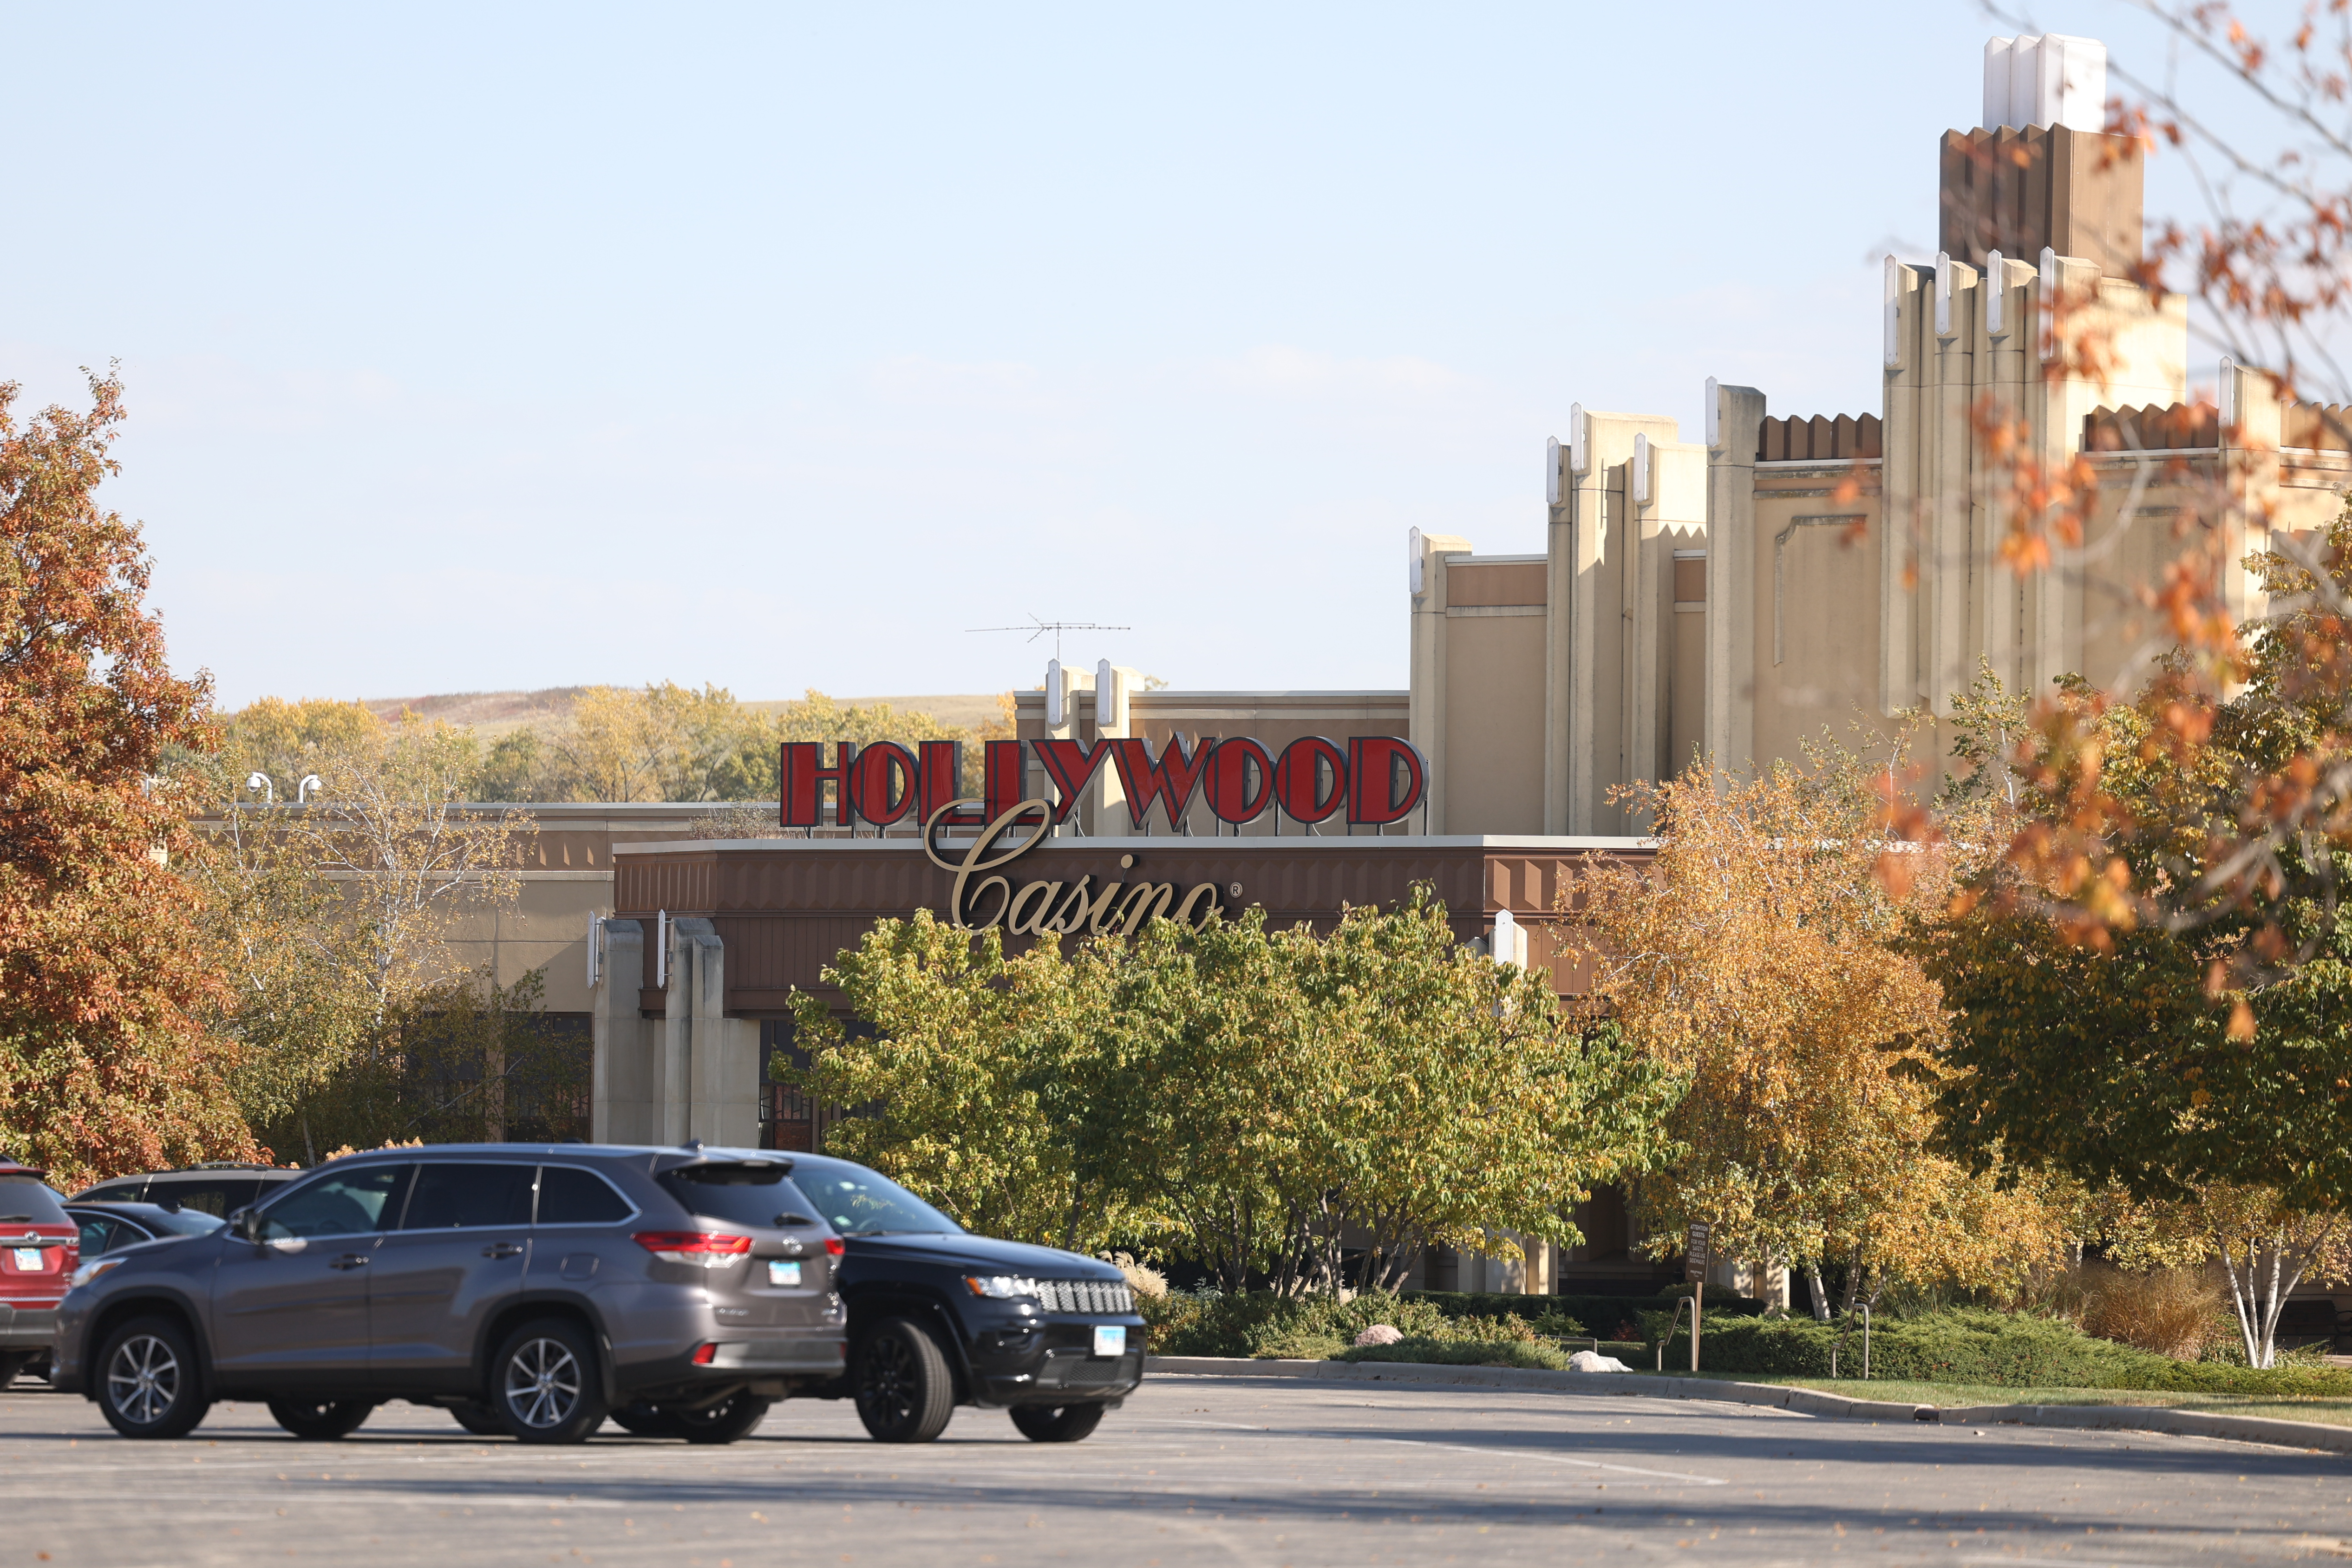 Morris to visit Hollywood Casino Toledo